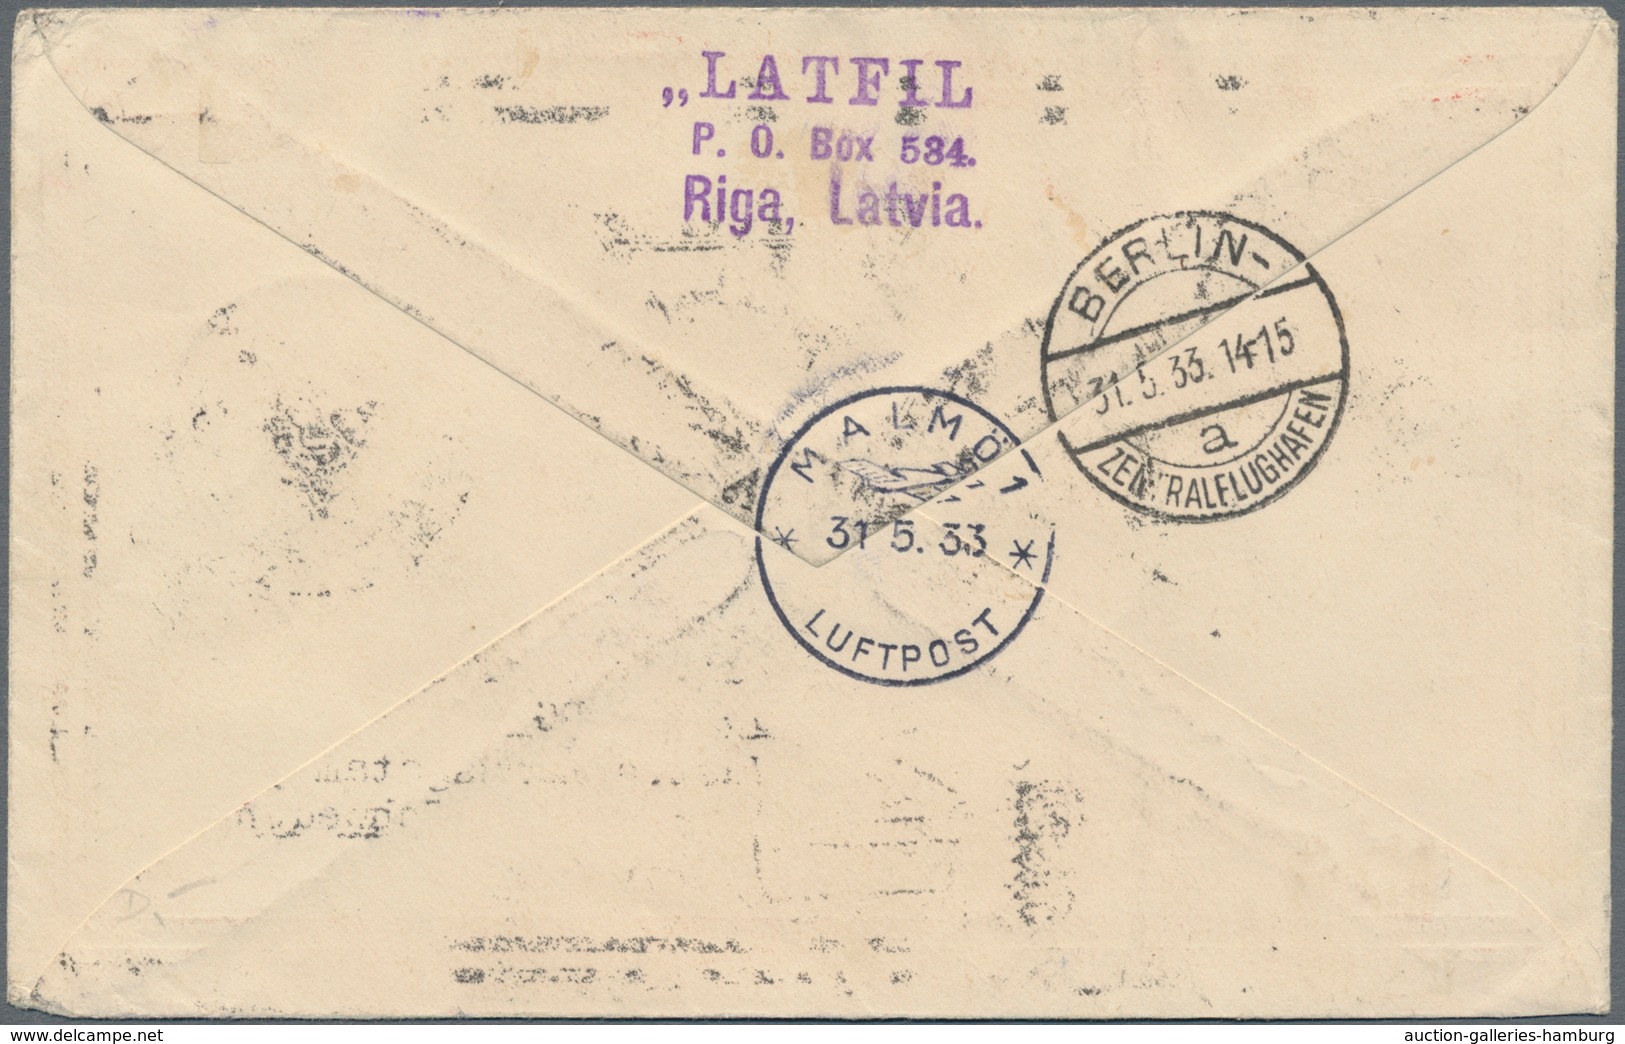 Lettland: 1933, Special Cover "LATVIA-AFRICA" Follower Cover From "RIGA-LIDPASTS 28.5.33" Via Berlin - Latvia